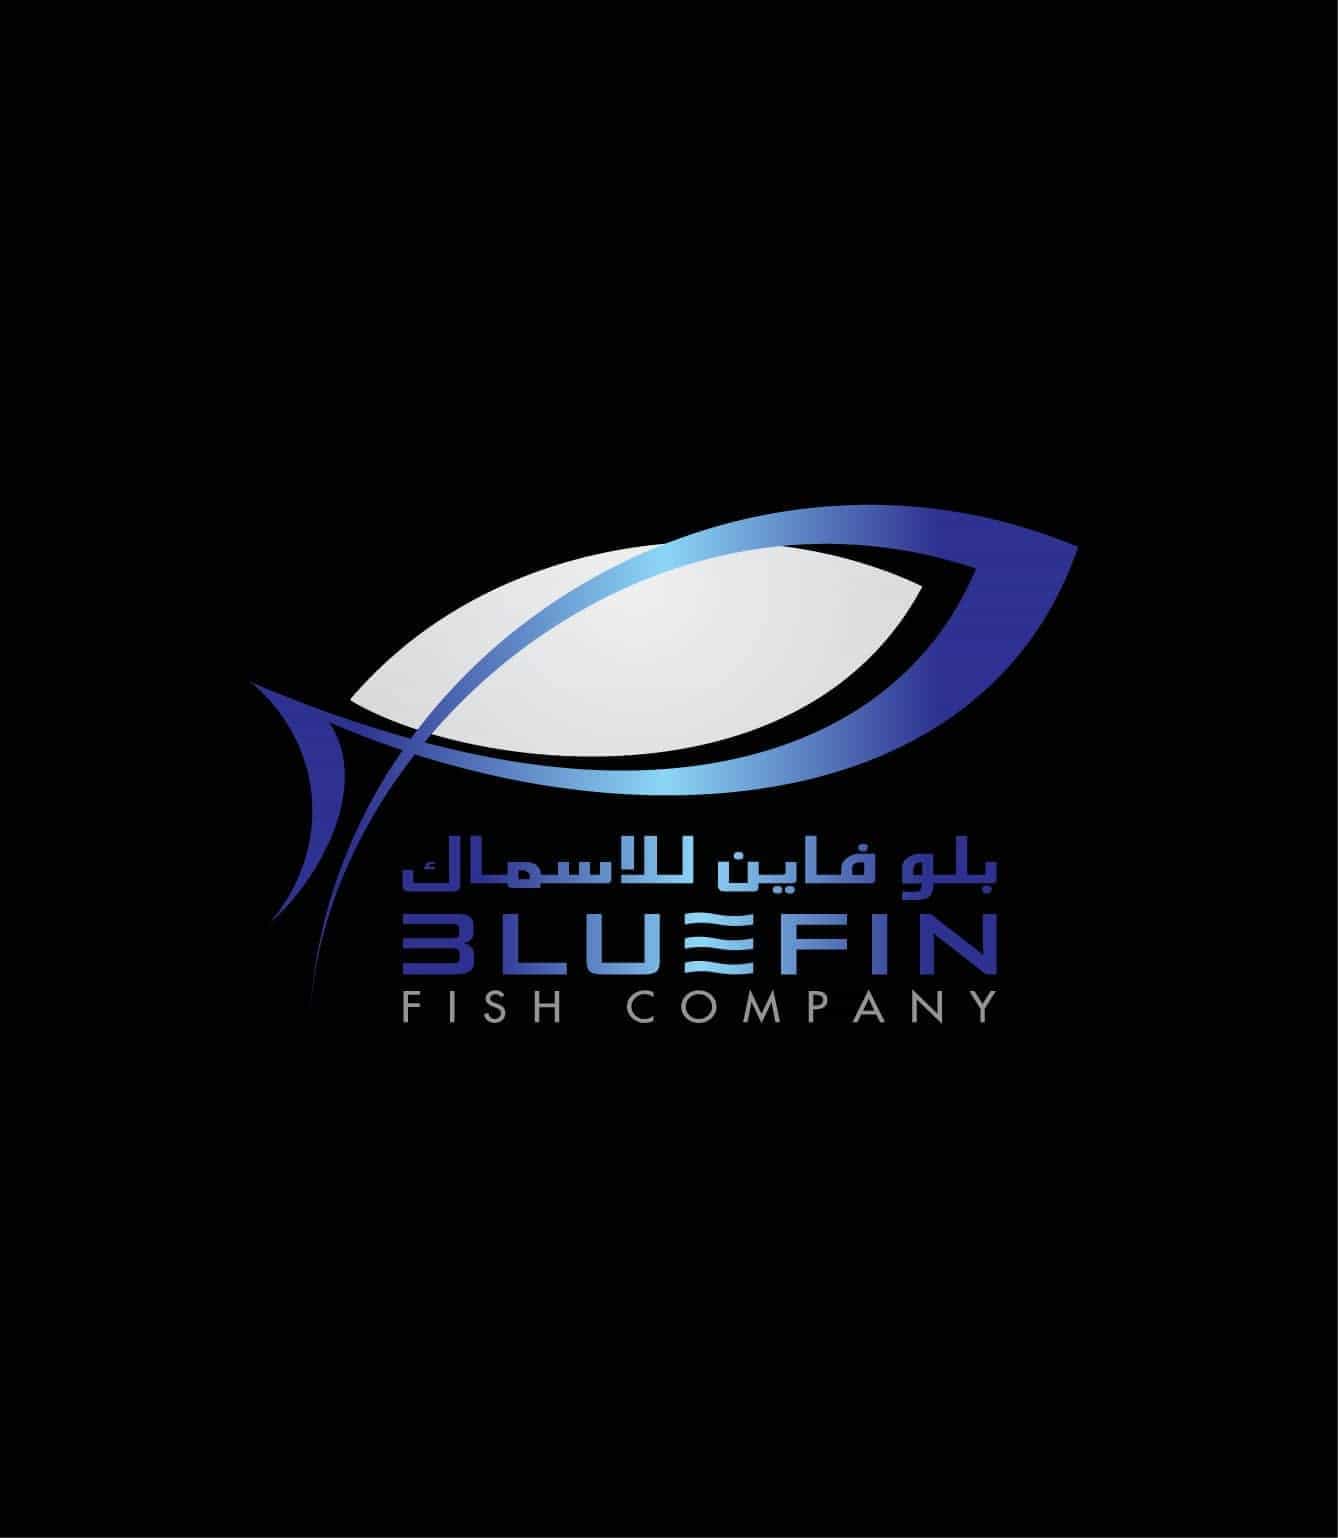 Bluefin Fish Company